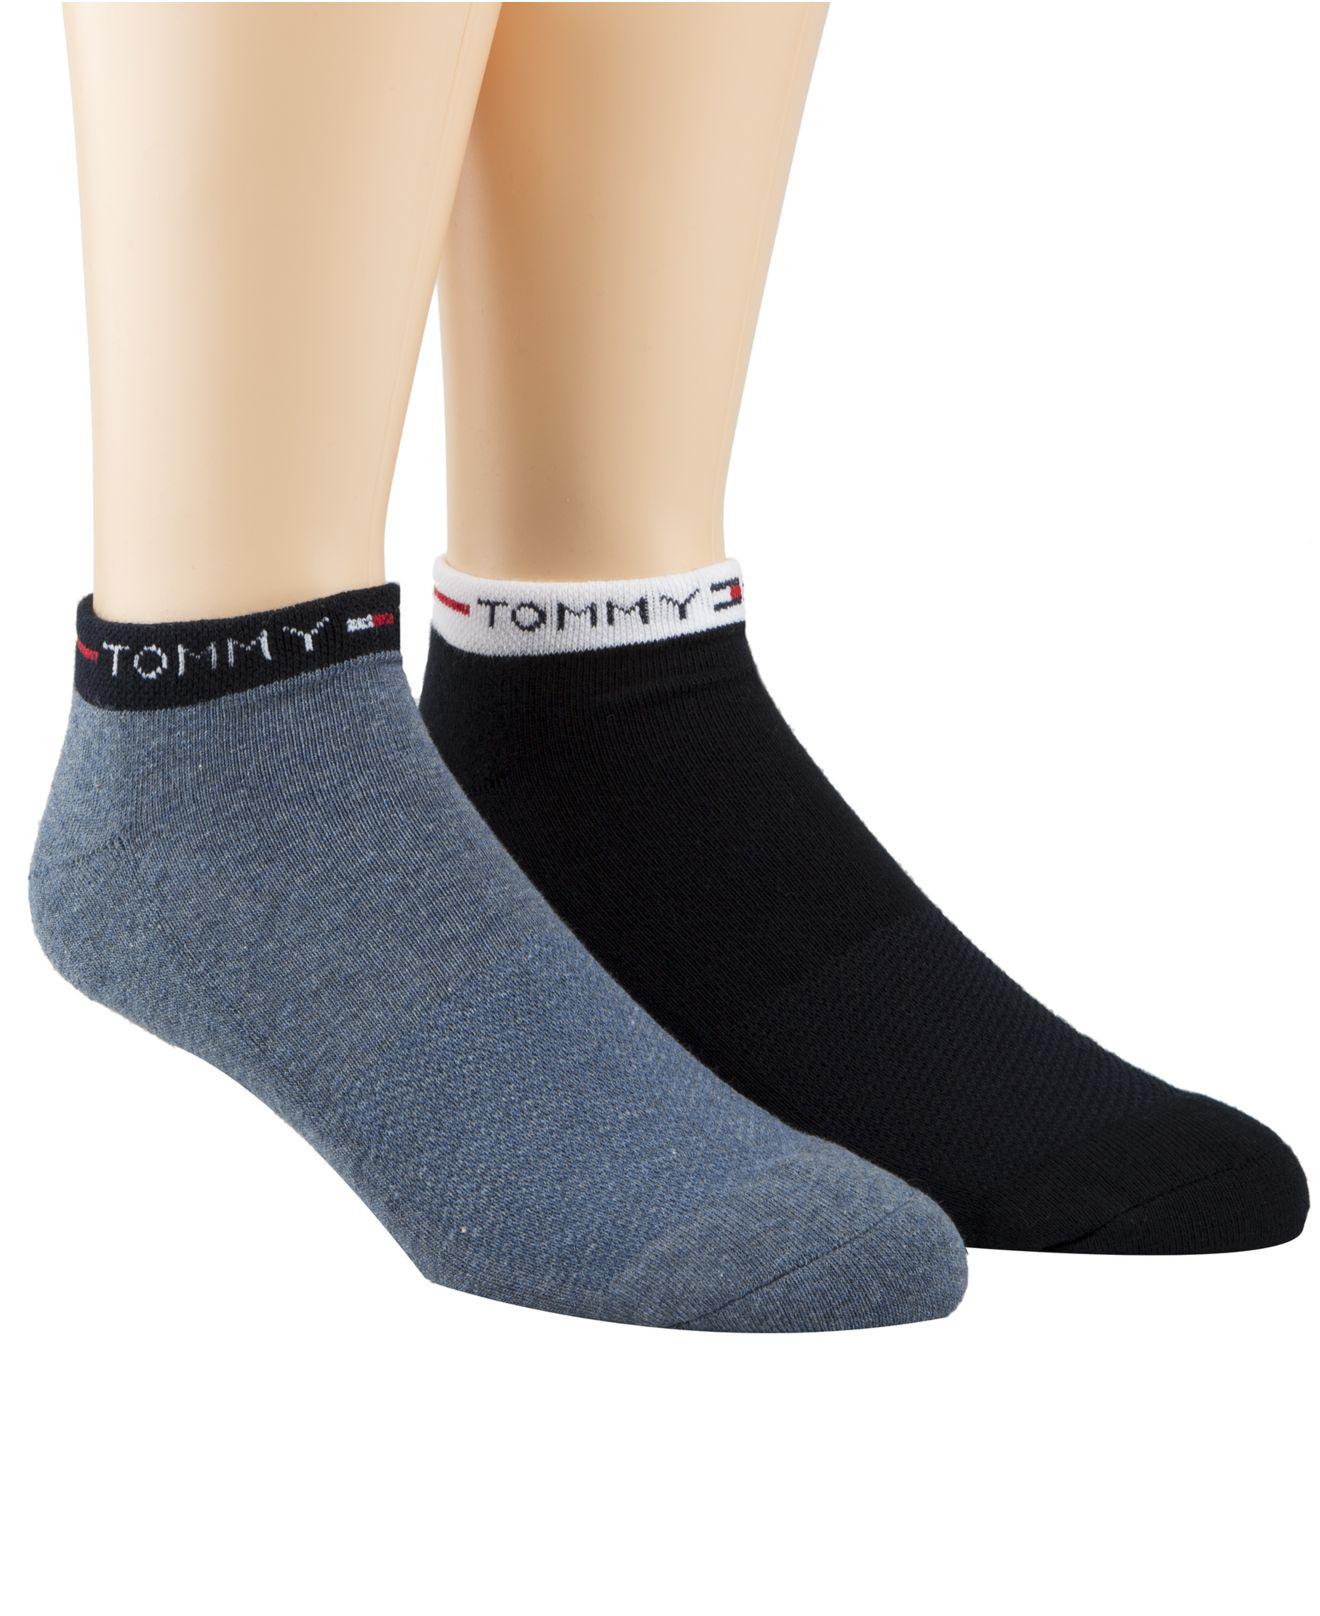 Tommy Hilfiger Cotton Men's 2-pk. Low-cut Liner Socks in Blue for Men - Lyst